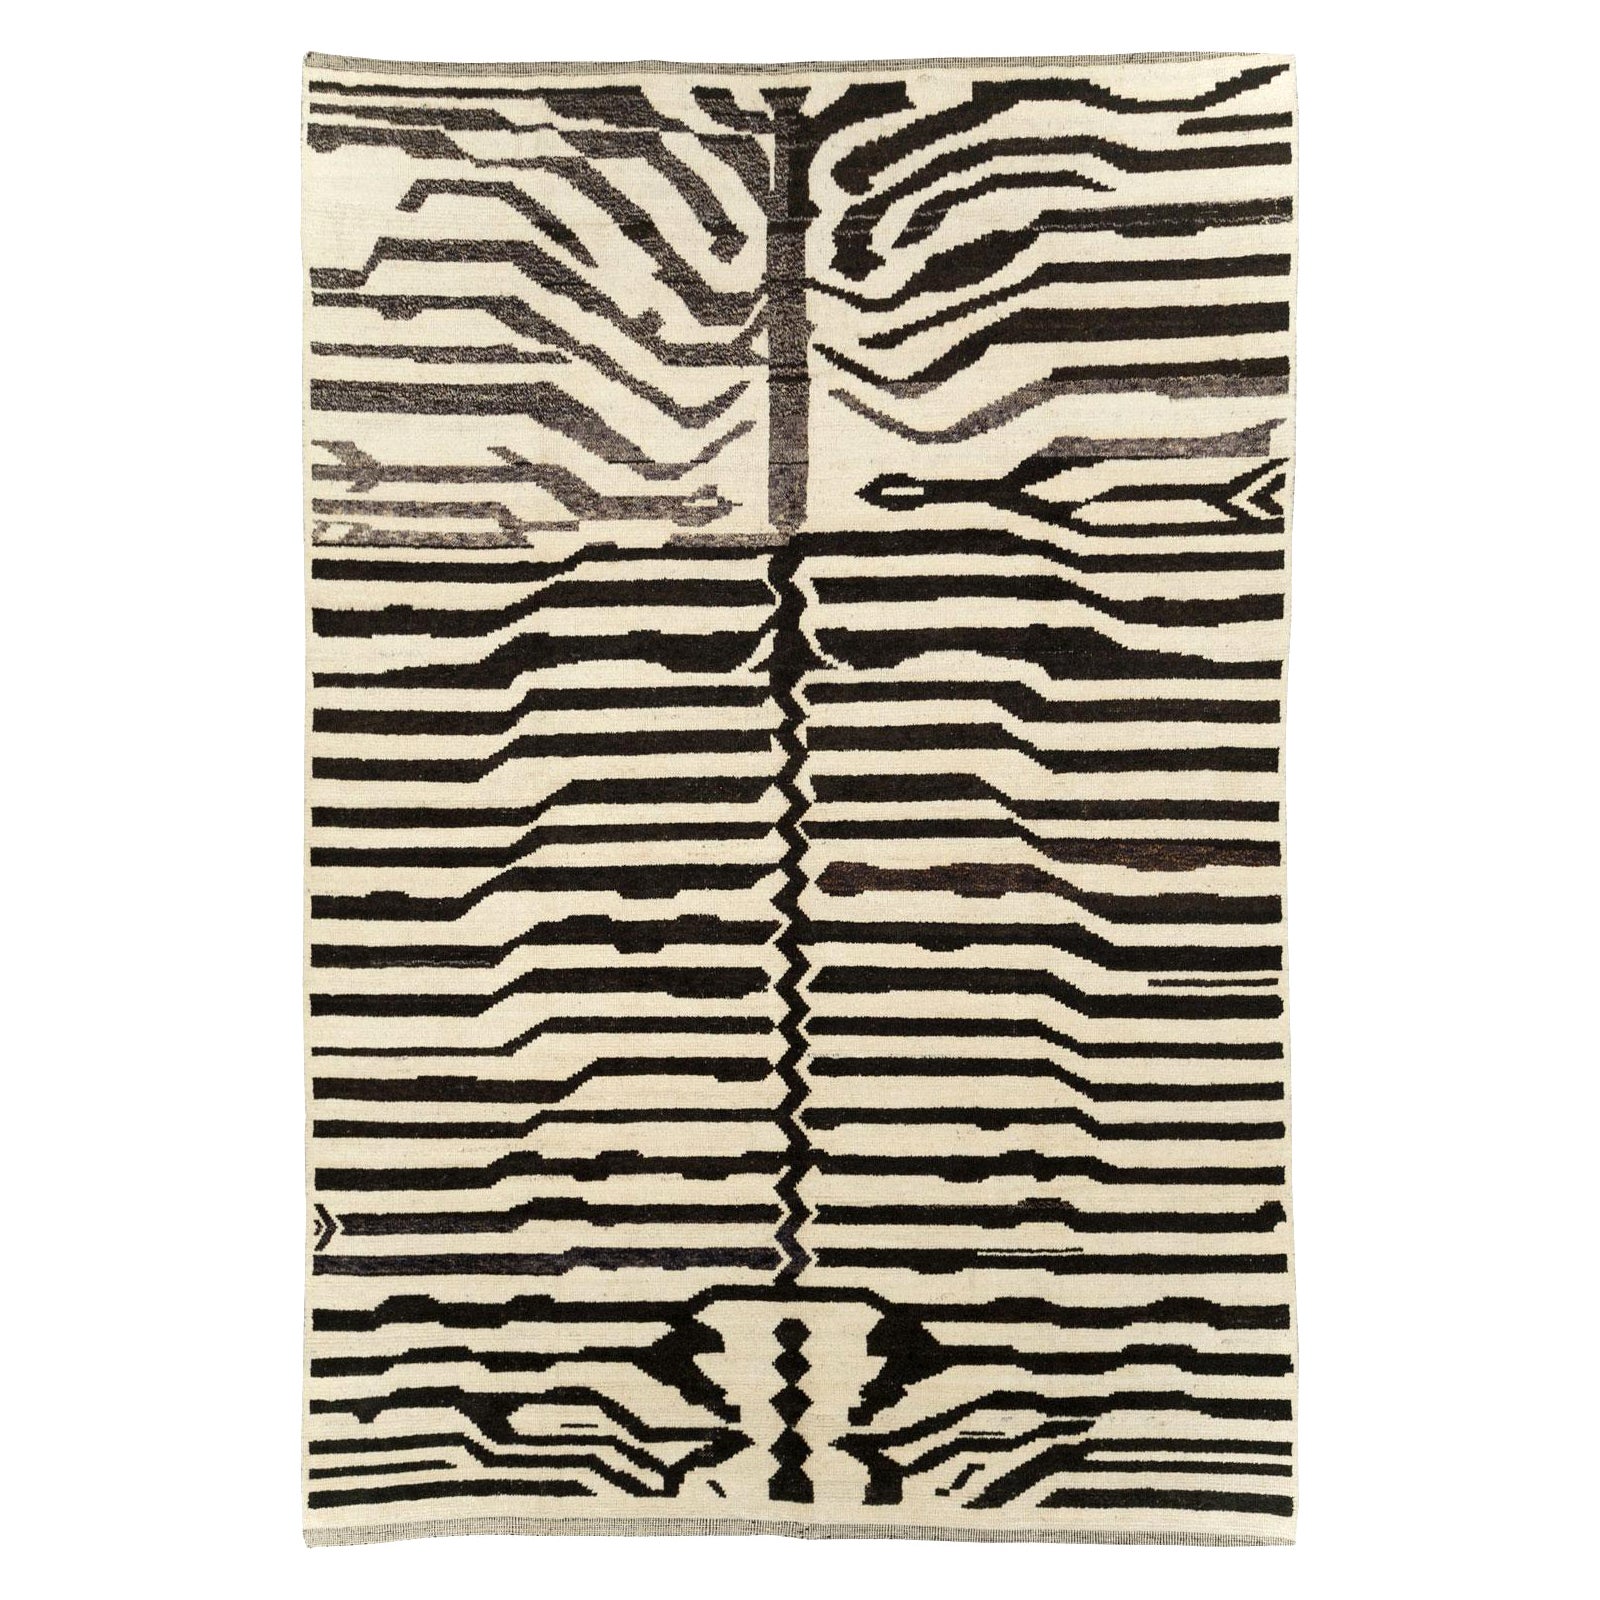 Galerie Shabab Collection New Handmade Turkish Zebra Print Room Size Carpet